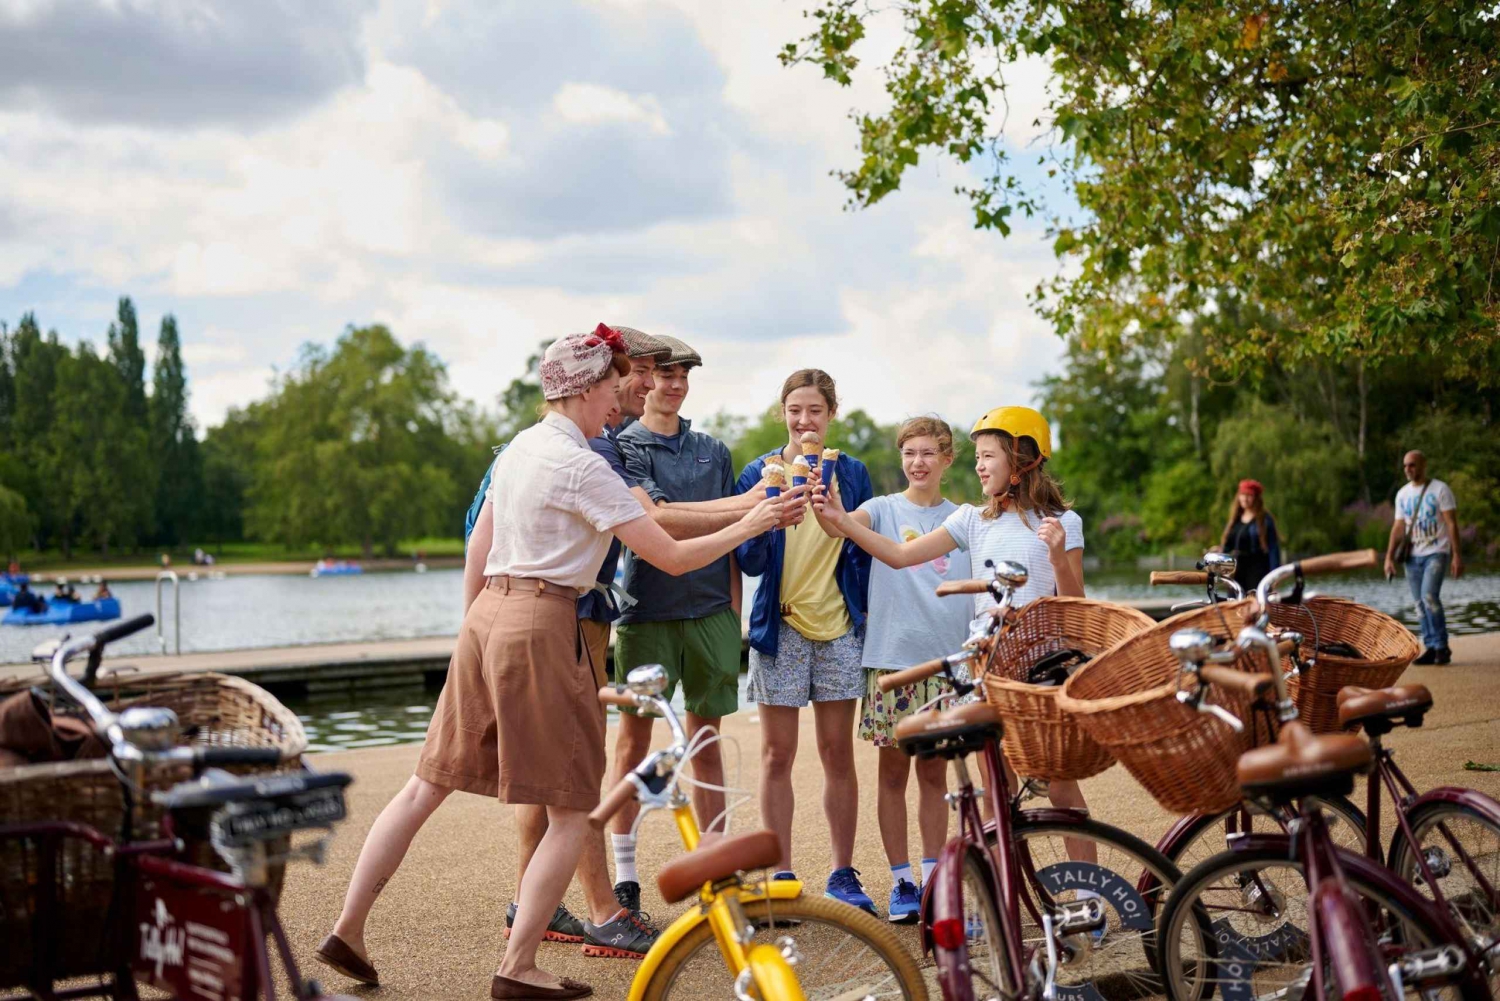 Londres: Tour familiar privado en bicicleta con asientos para niños